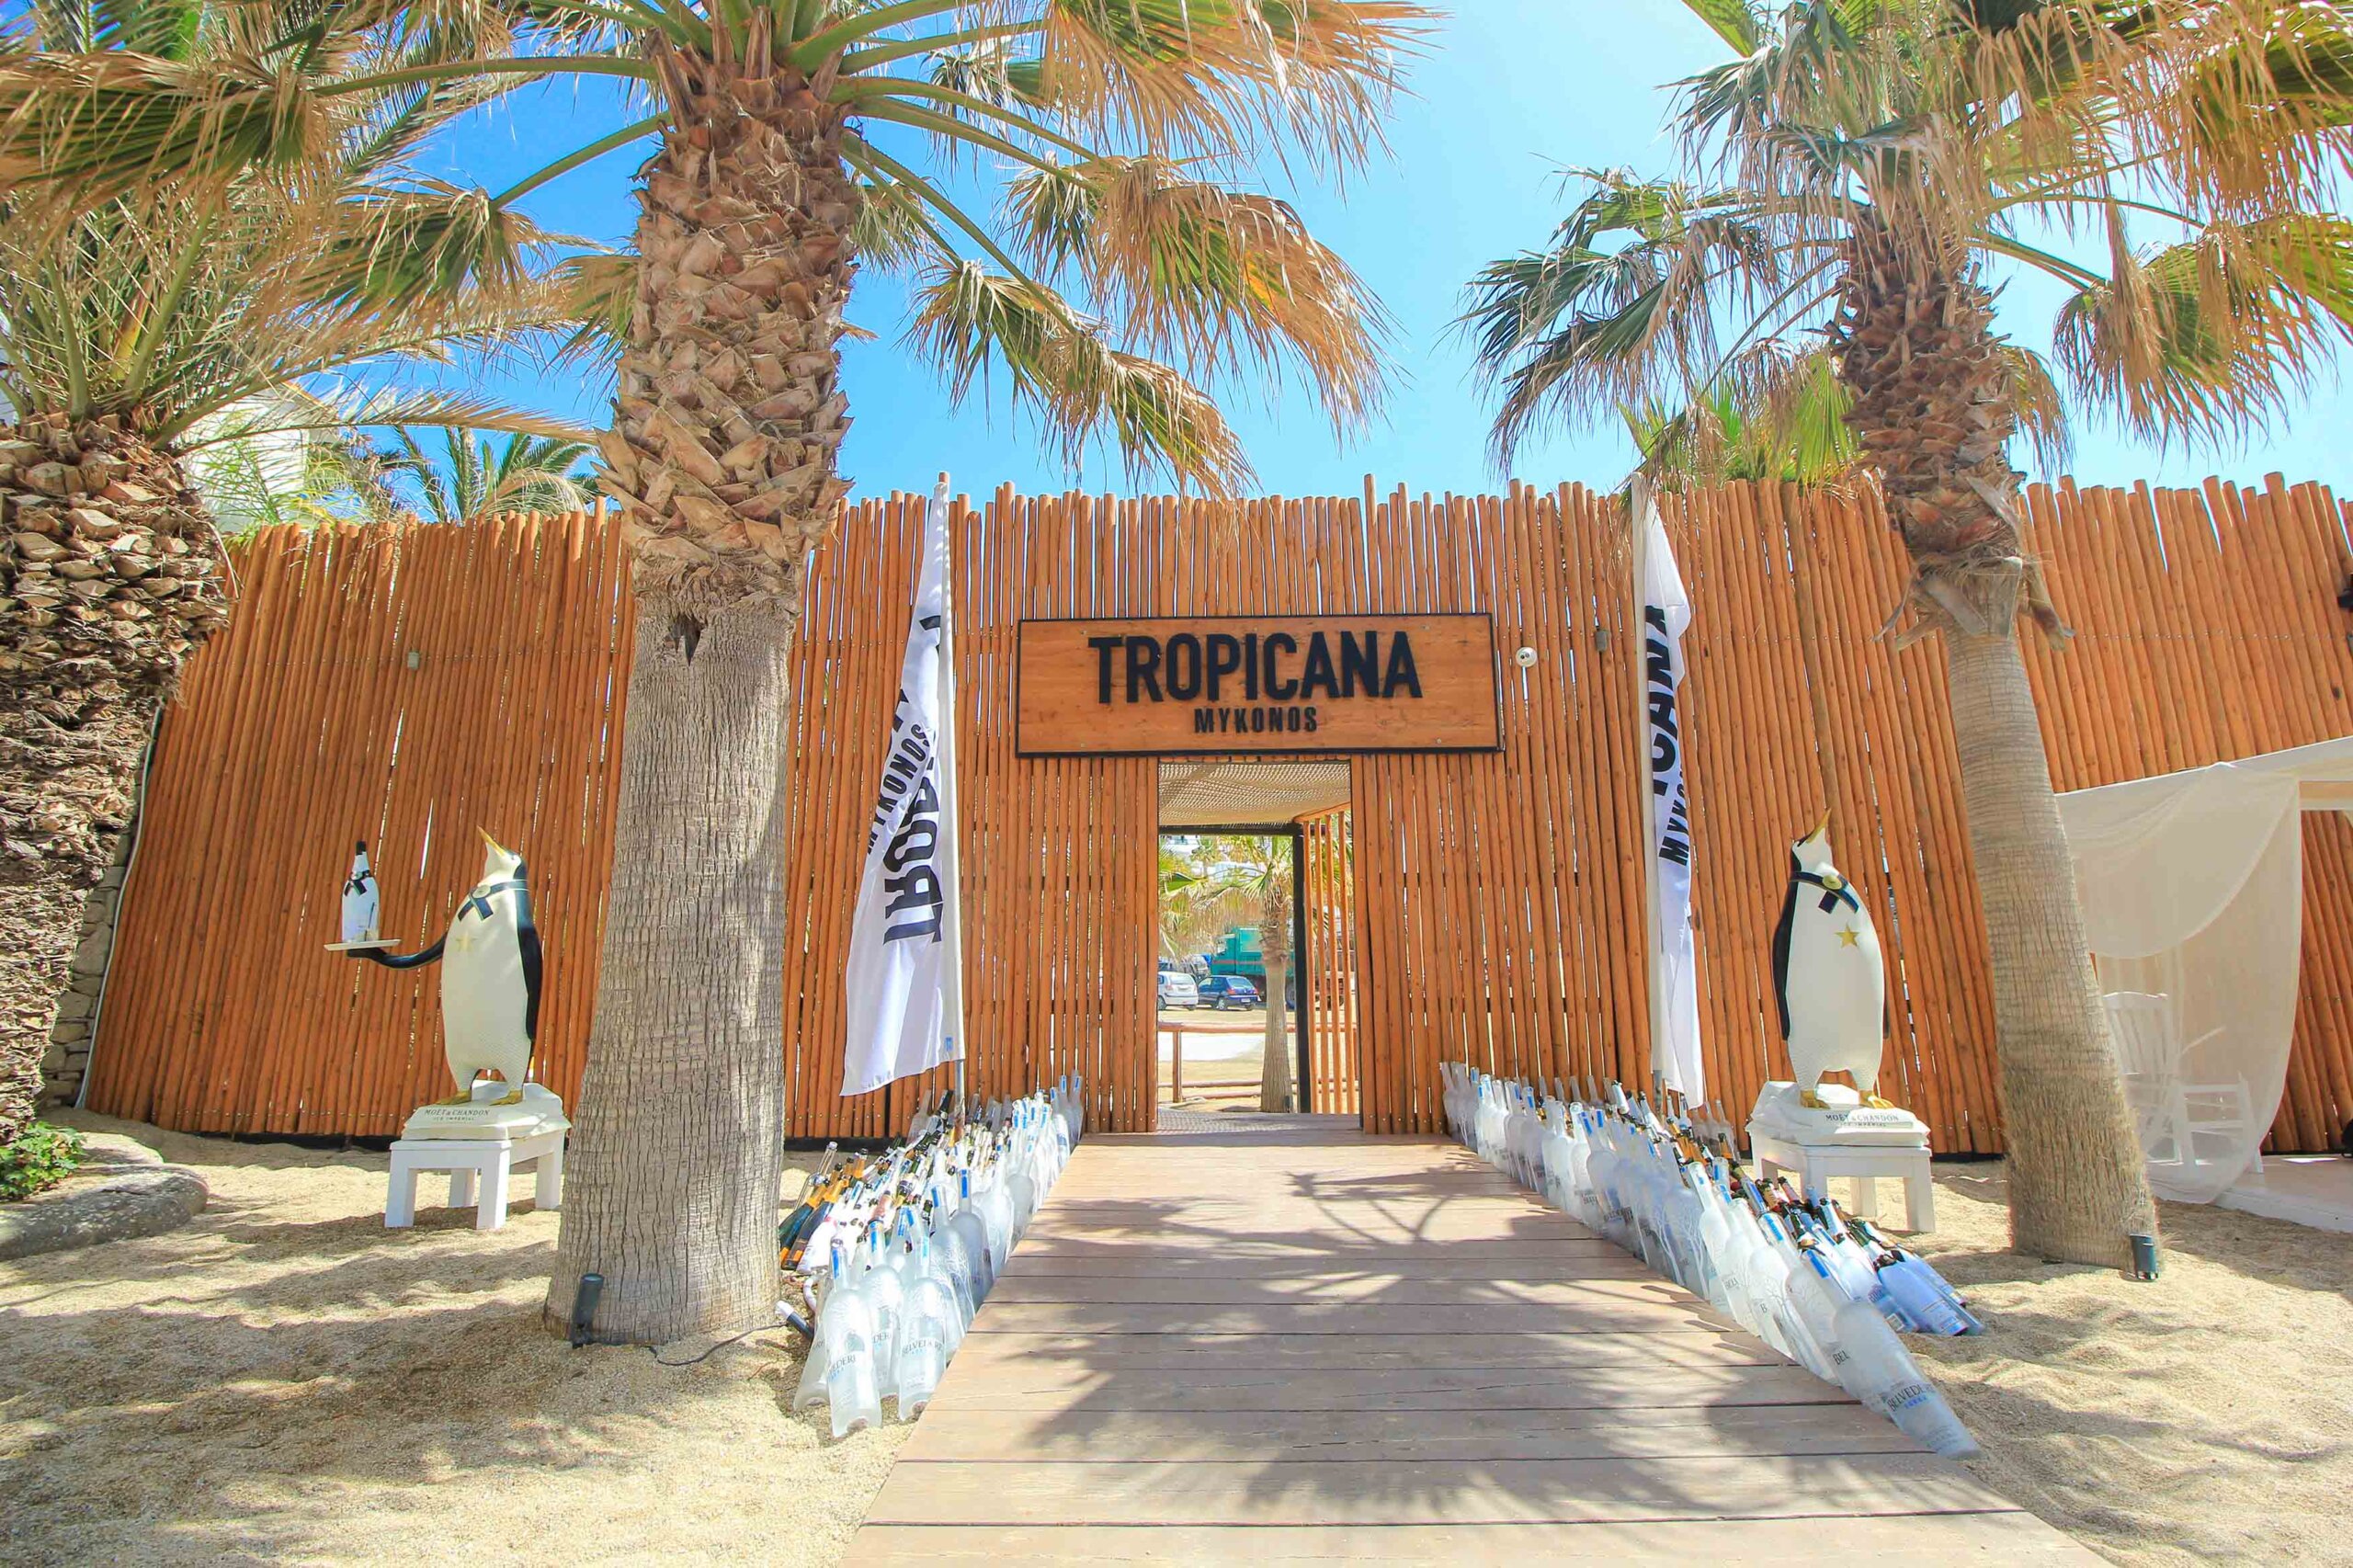 The 12 Best Beach Clubs in Mykonos - PlacesofJuma